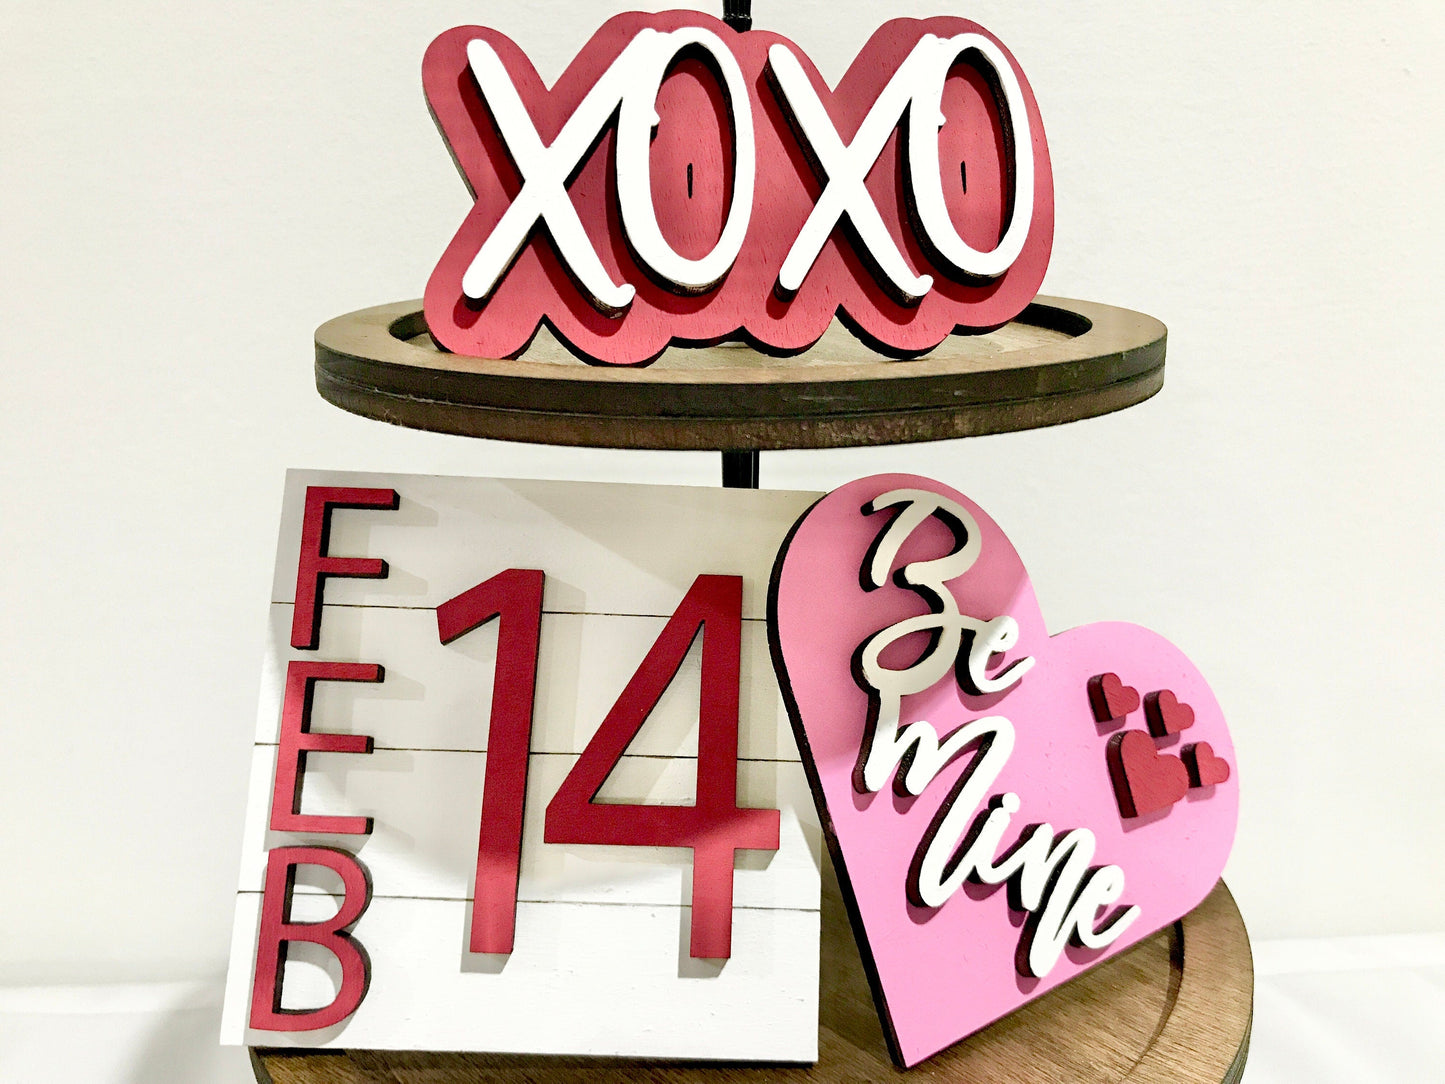 xoxo mini sign - feb 14 shiplap sign - be mine heart sign - tiered tray mini signs